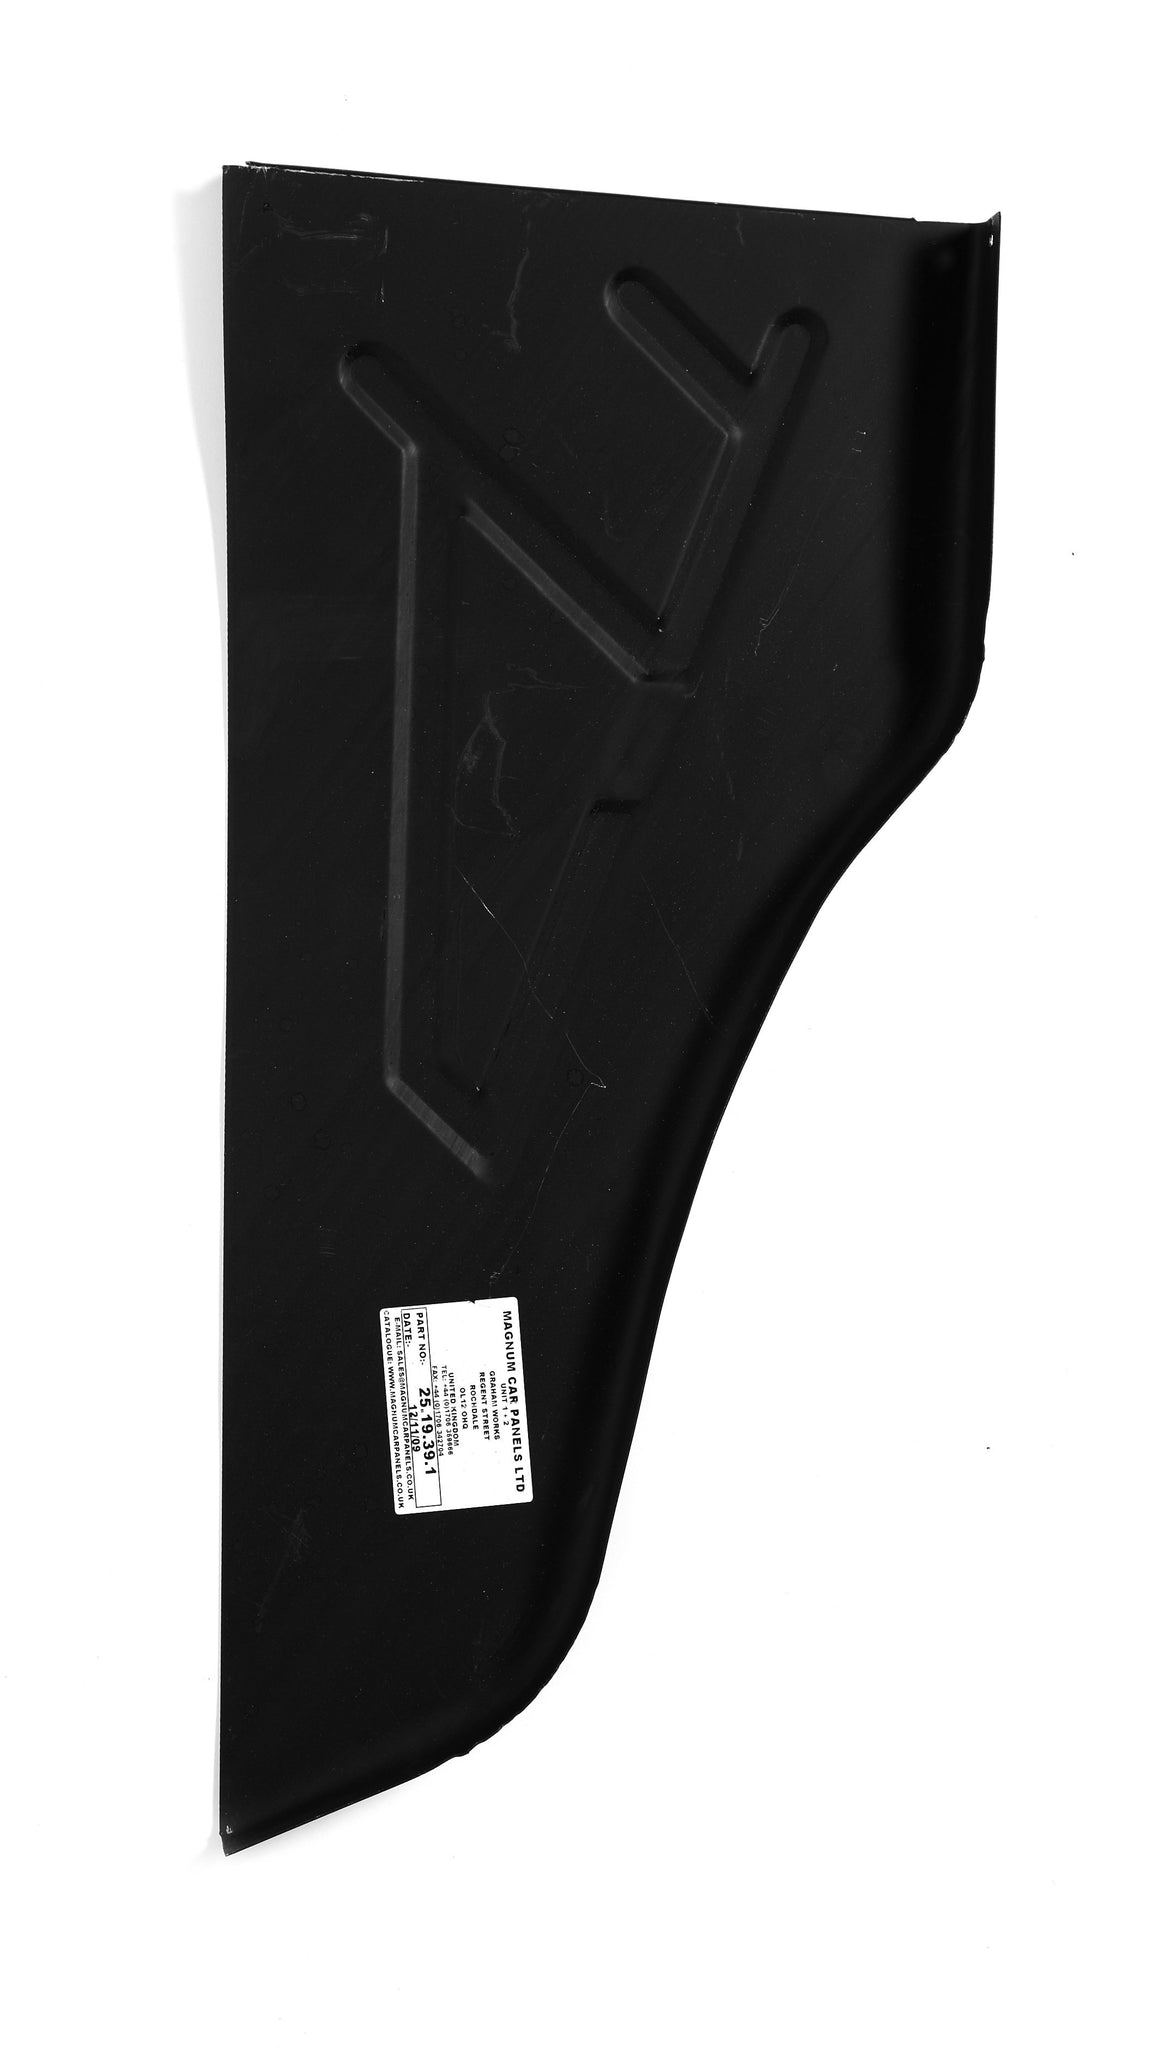 Escort MK2 Front Splash Shield ( A Panel ) L/H 25-19-39-1